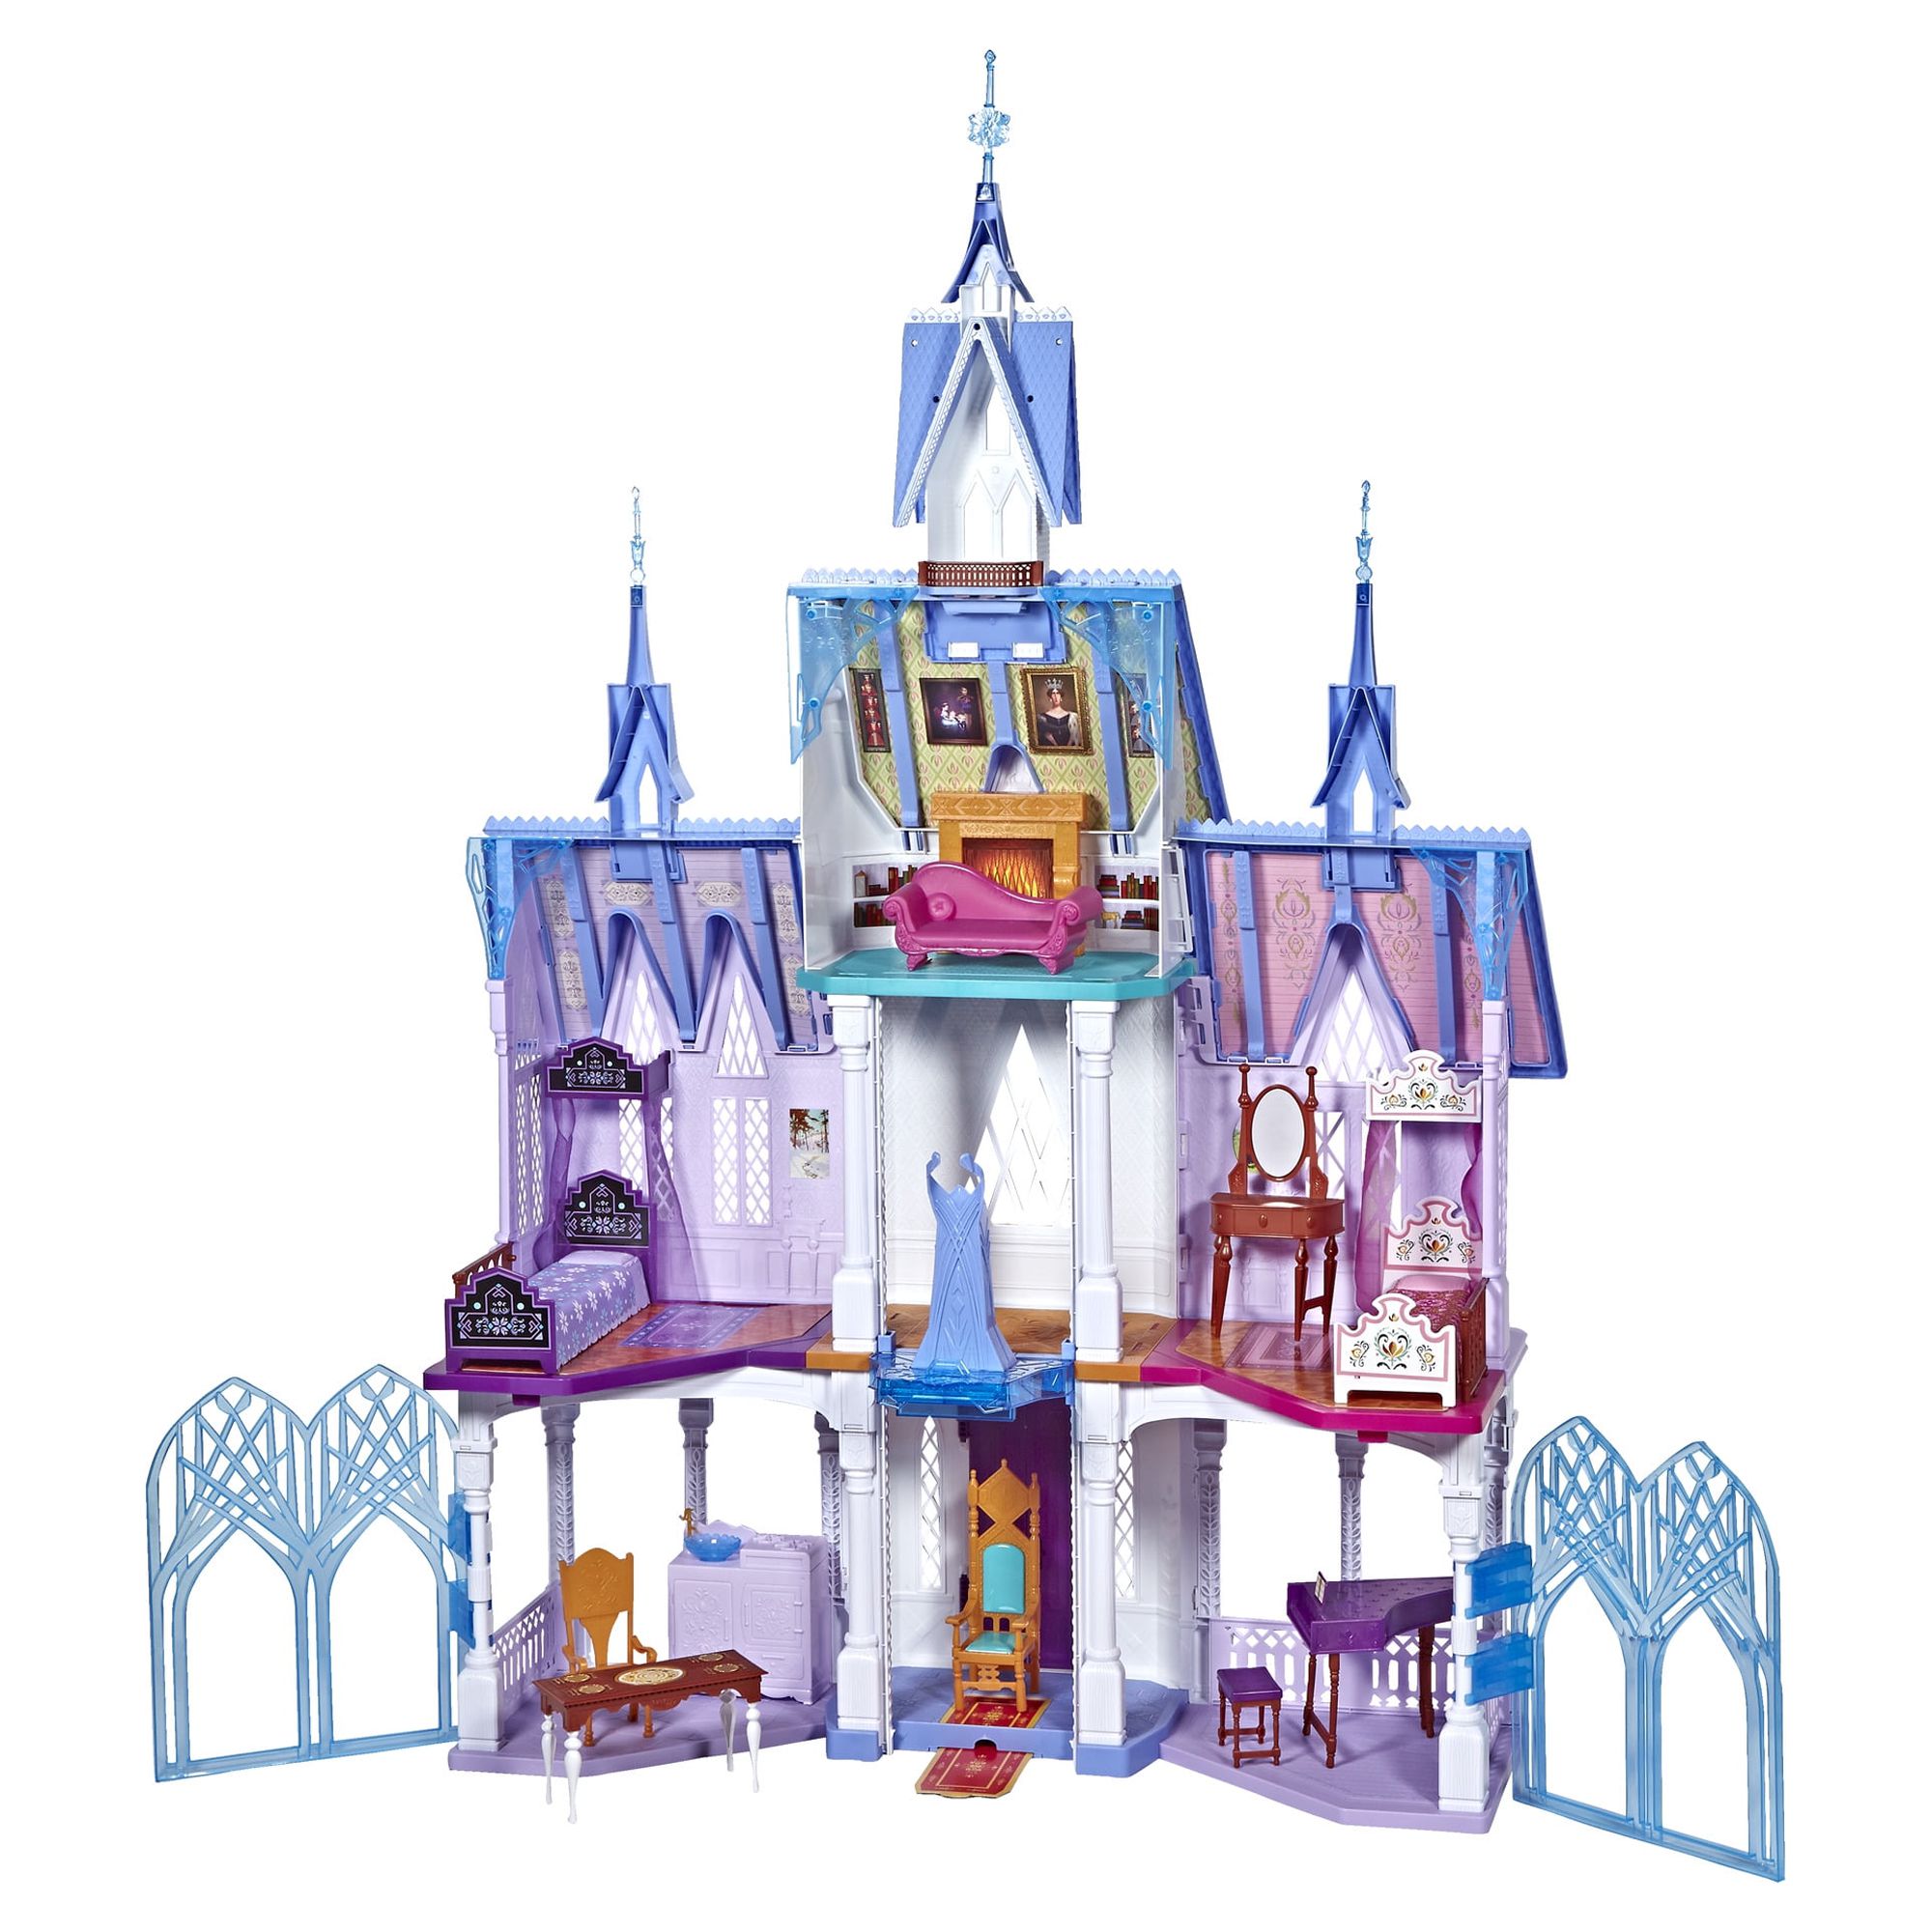 Disney Frozen 2 Ultimate Arendelle Castle Playset, Lights, Moving Balcony, 5x4 Ft. - image 1 of 26